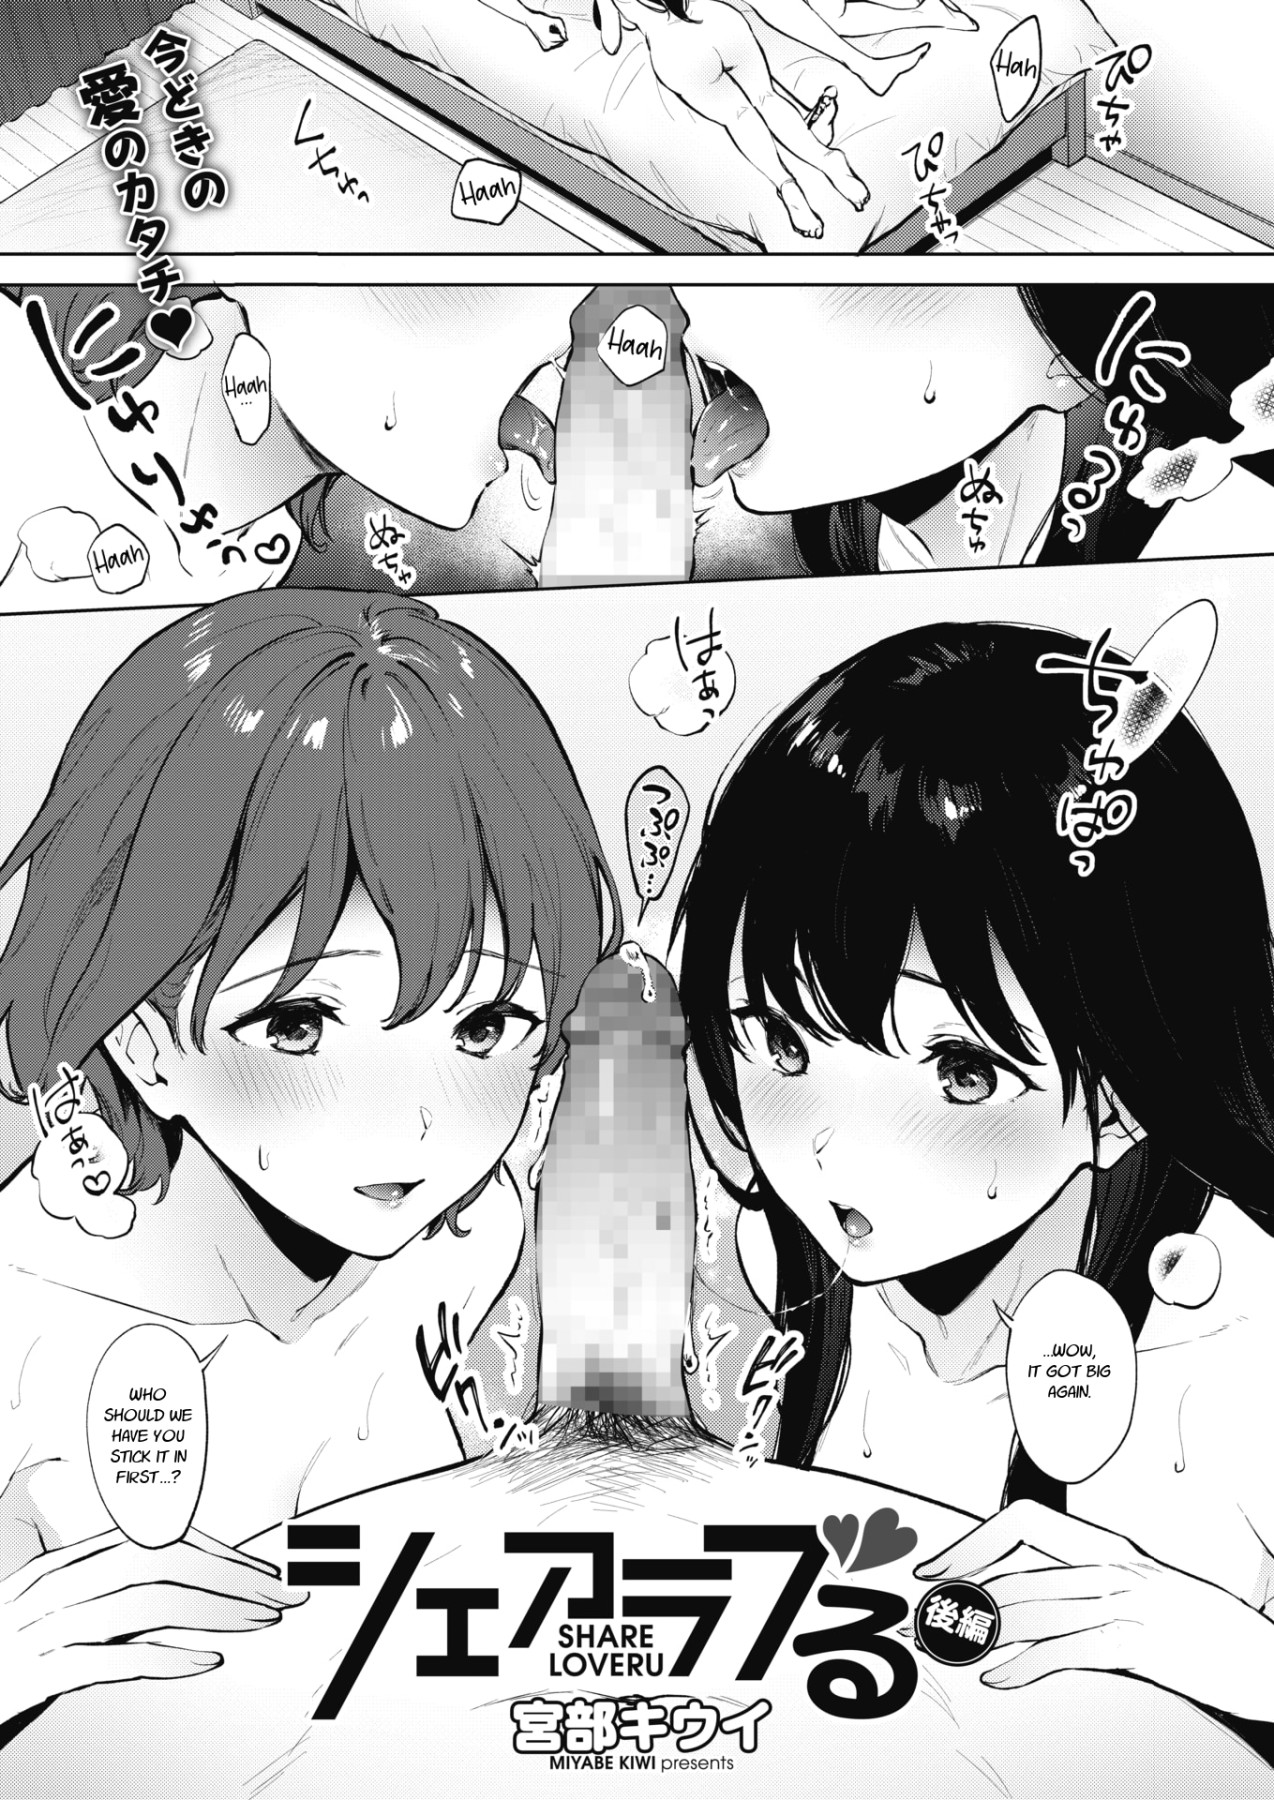 Hentai Manga Comic-Share Loveru First-Chapter 2-1